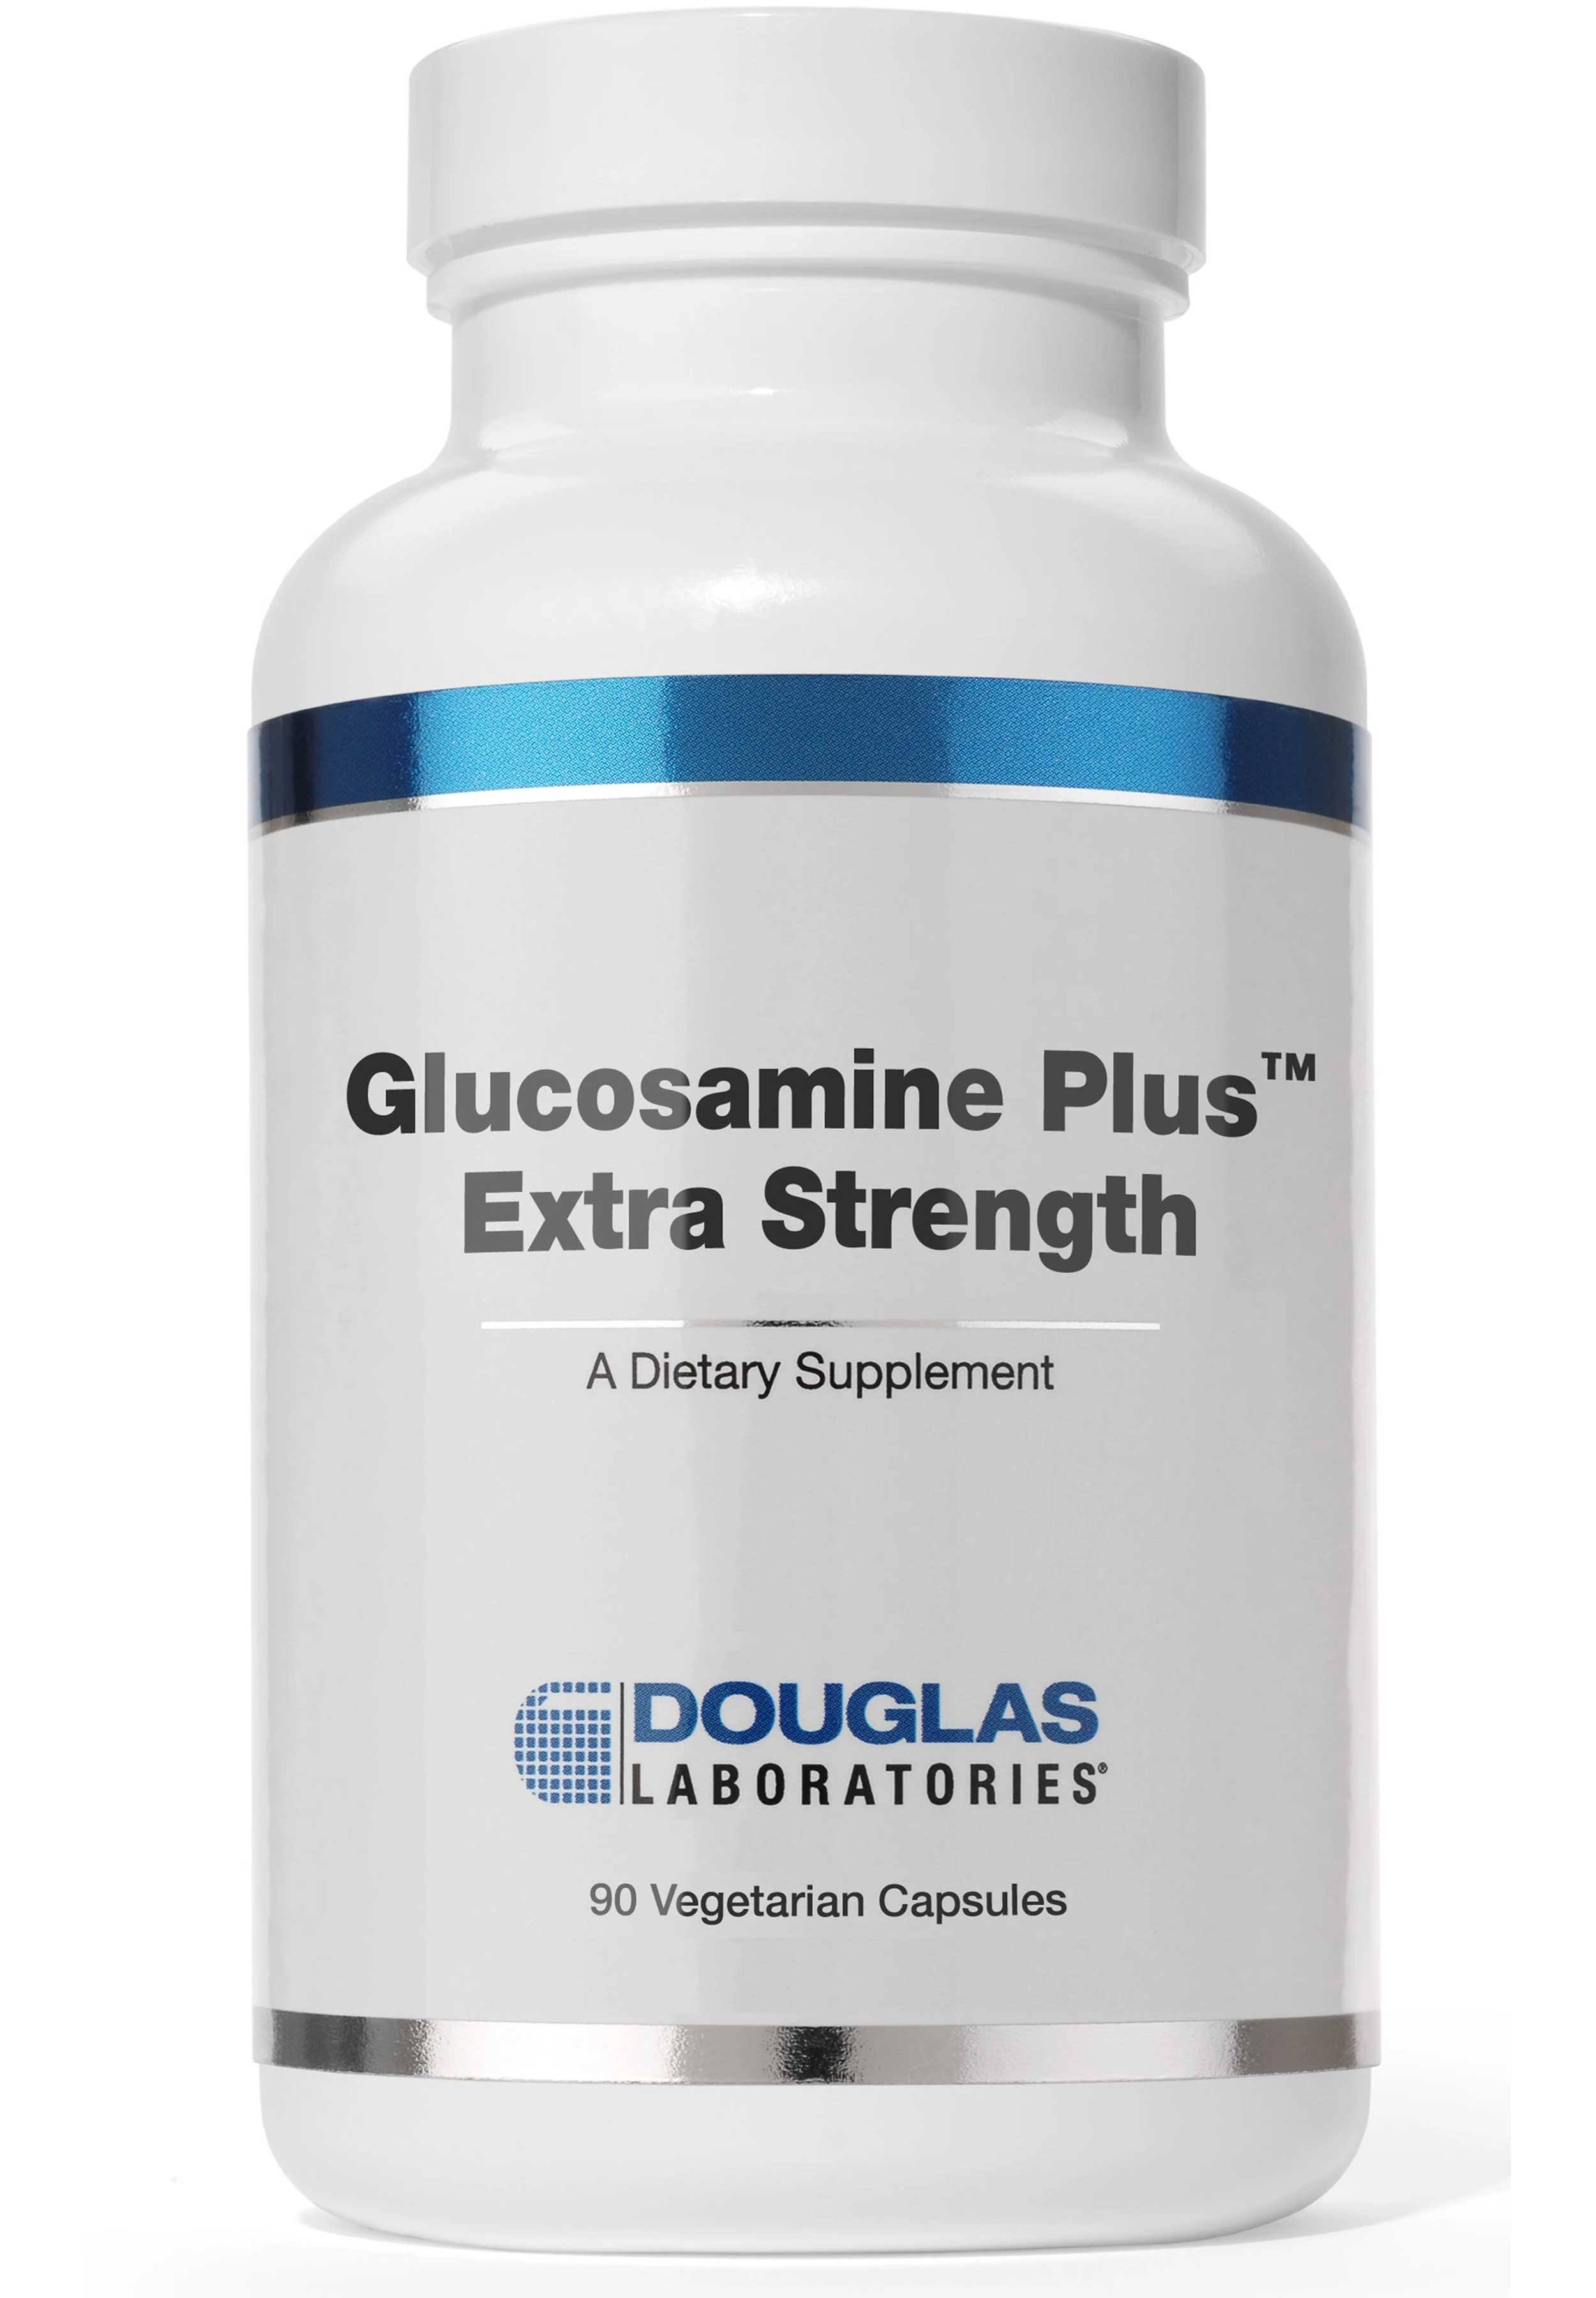 Douglas Laboratories - Glucosamine Plus Extra Strength - 90 Capsules